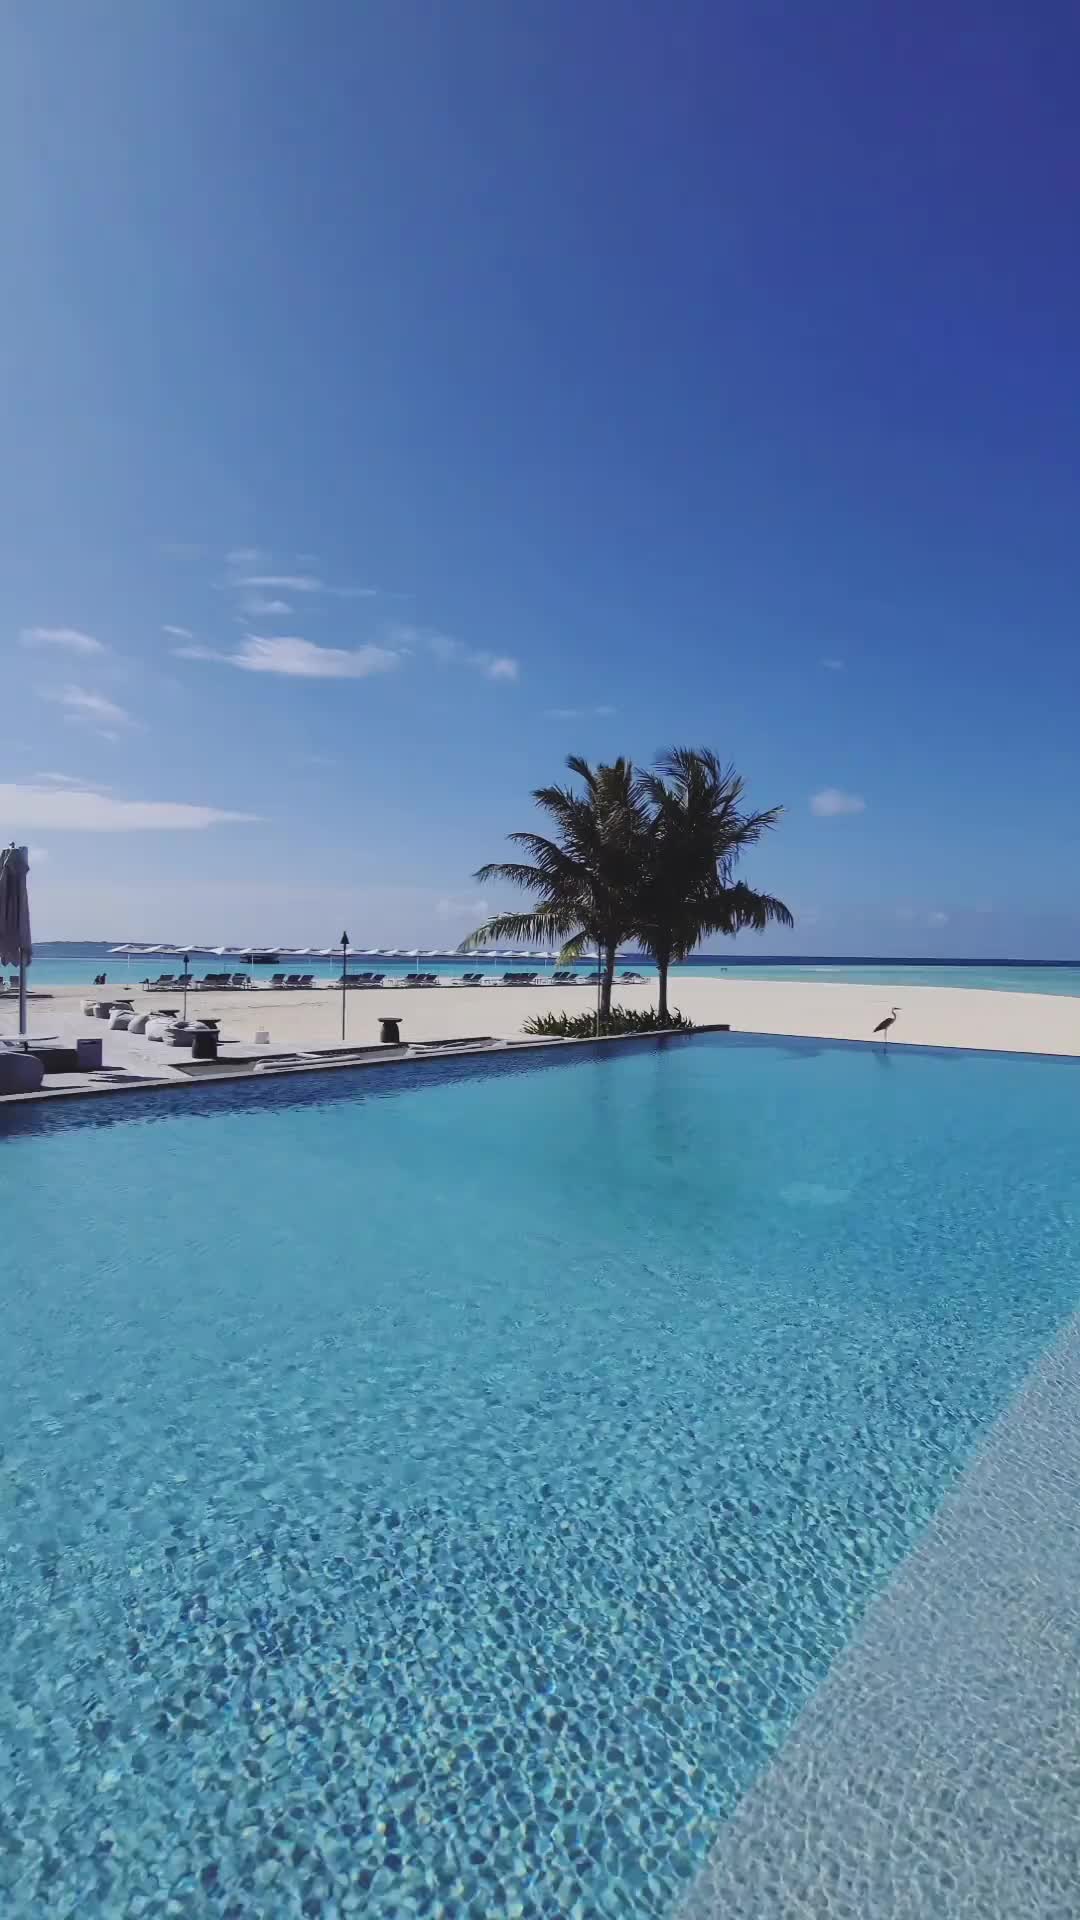 Paradise 🤩

📍 Four Seasons Landaa Giraavaru, Maldives

-

Follow us ❤️ @toptravelplaces_ for more 👍
Follow us ❤️ @toptravelplaces_ for more 👍
Follow us ❤️ @toptravelplaces_ for more 👍

-

📸 Video taken by @toptravelplaces_

-

#maldives #maldivesresorts #maldivas #malediven #fsmaldives #maldivesislands #maldivesinsider #visitmaldives #maldiveslovers #Мальдивы #путешествия #maldivesparadise #maldivesphotography #amazingdestinations #instatravel #paradise #beautifulmaldives #beachtime #videooftheday #bali #borabora #viralvideos